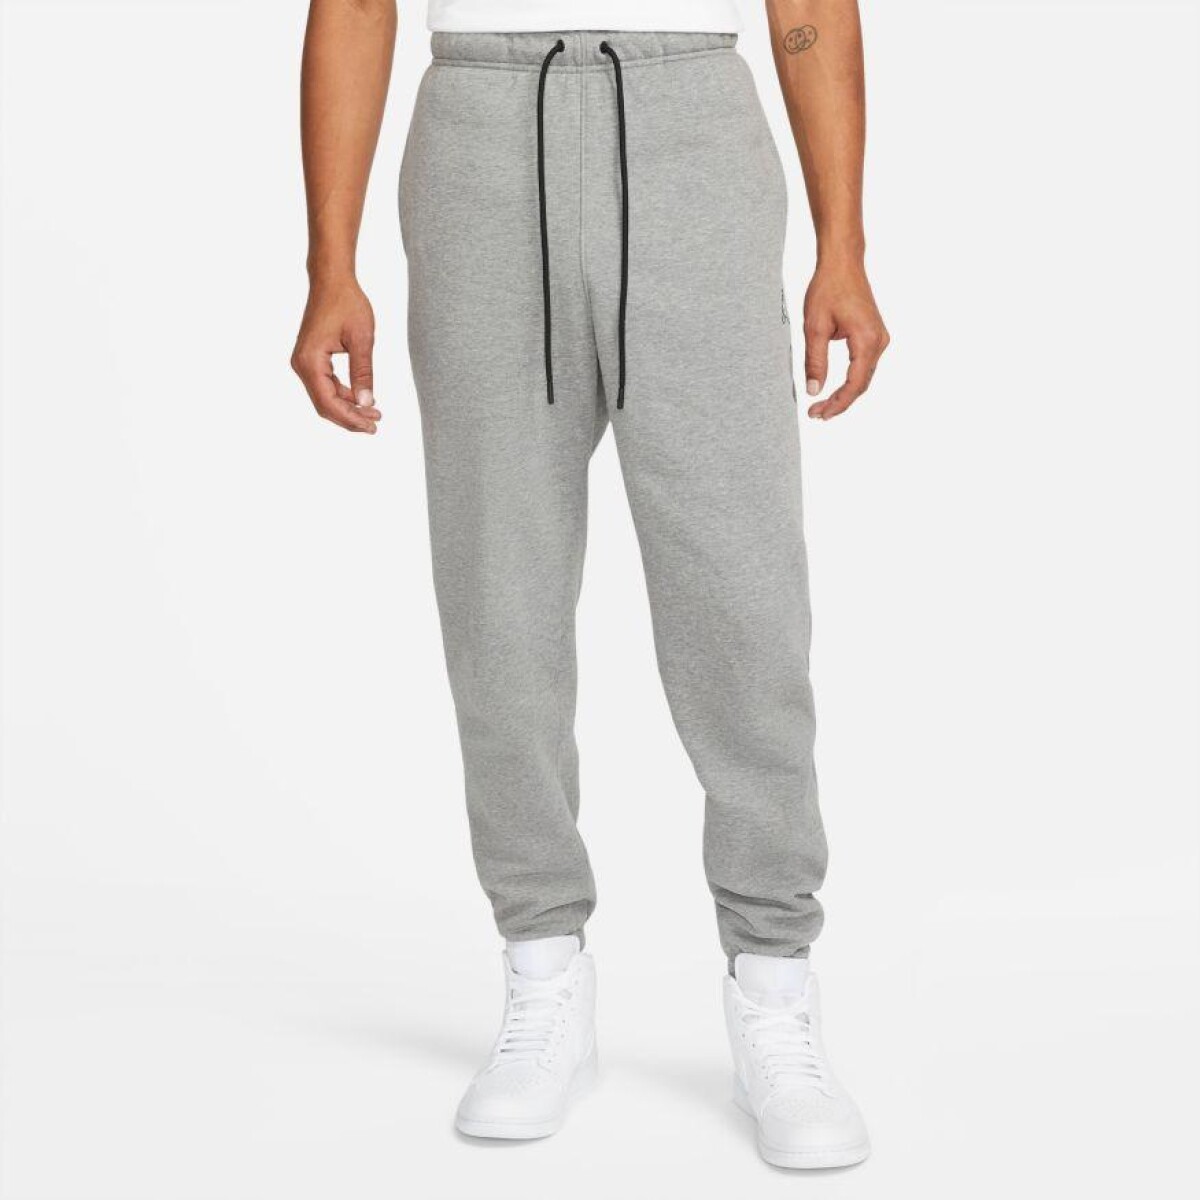 Pantalon Nike Moda Hombre Ess Flc Pant Carbon Heather - S/C 